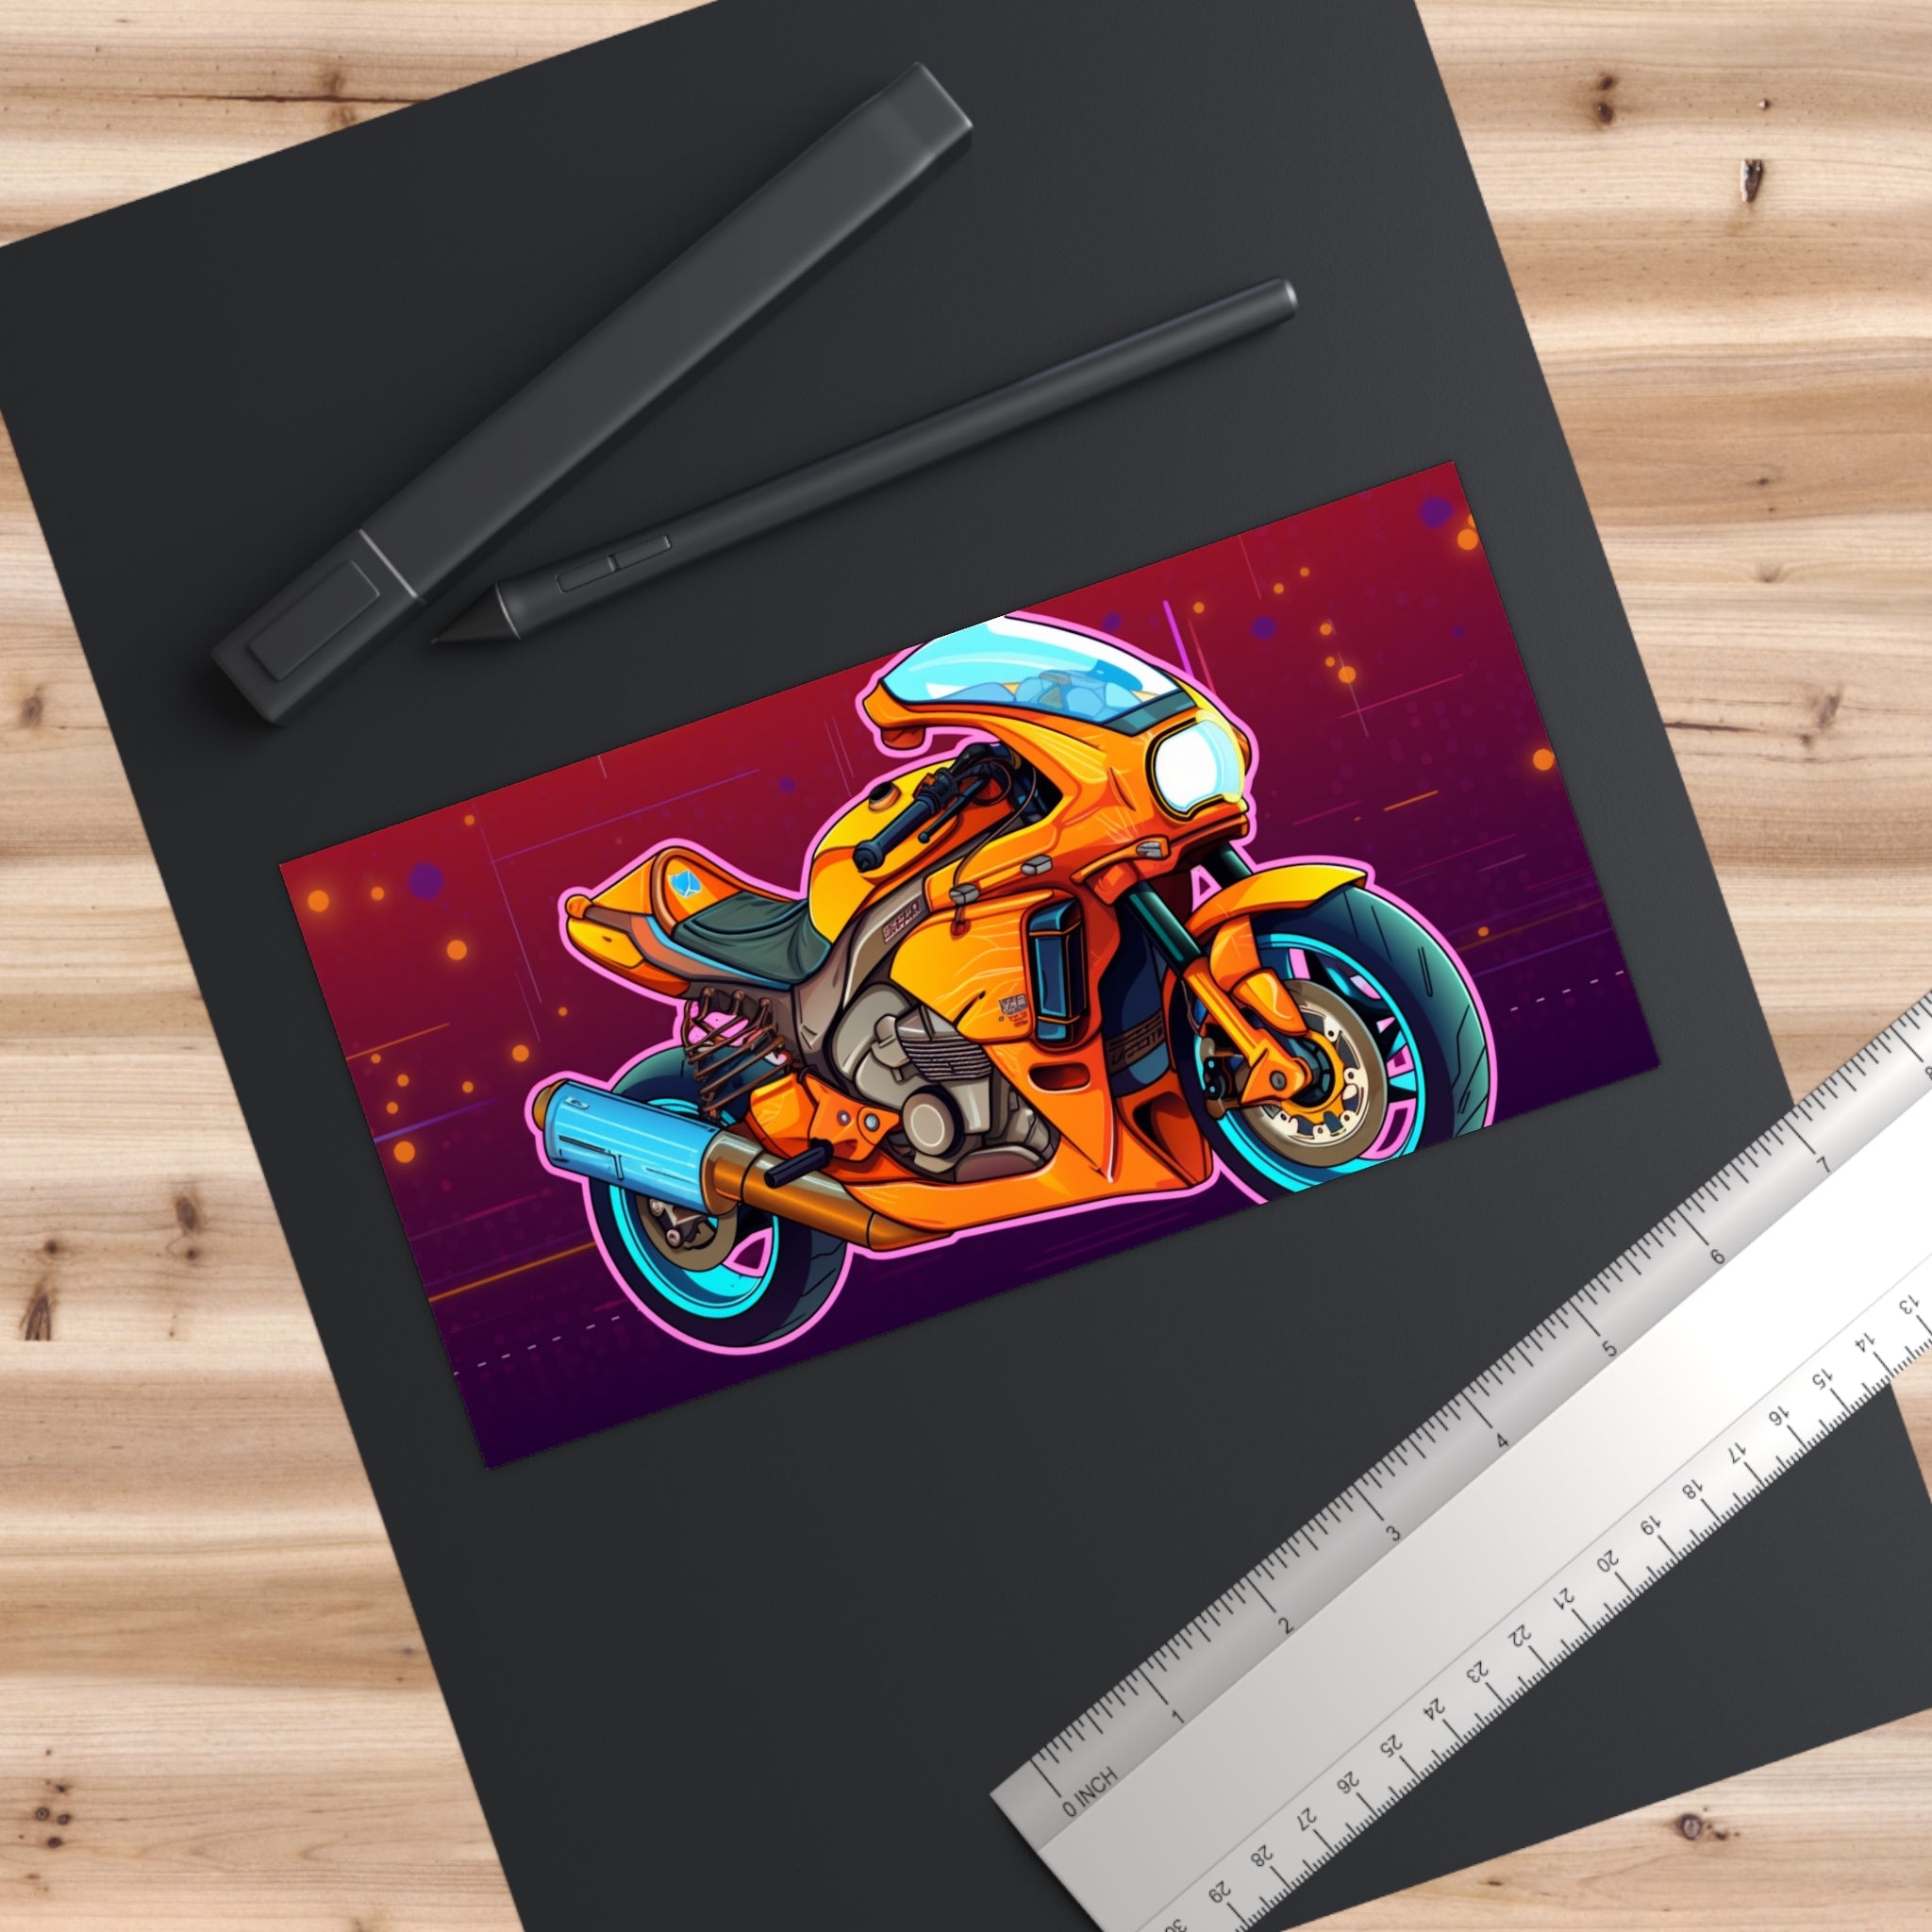 Bumper Stickers - Pop Art Designs, Motorcycle 09